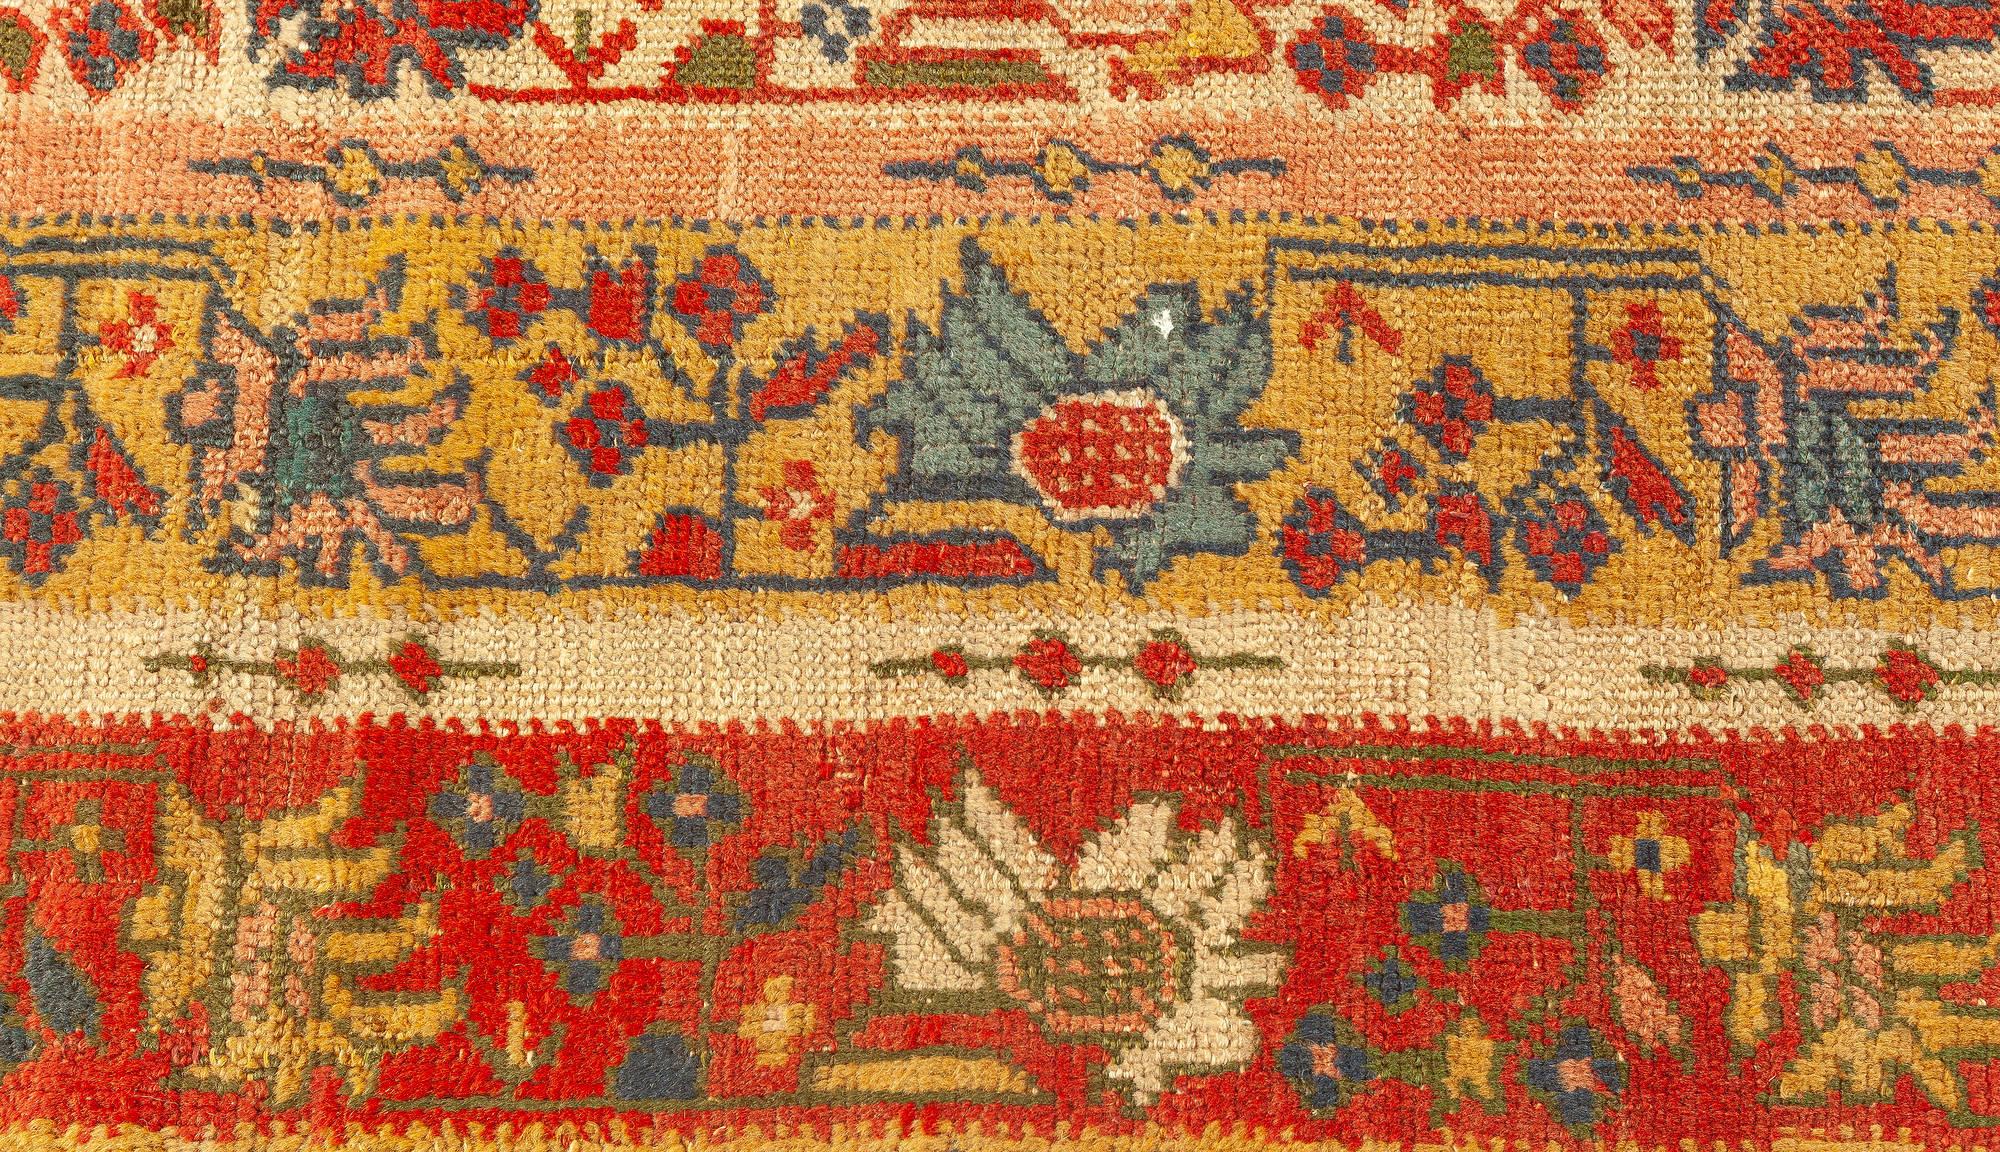 19th century Turkish Oushak botanic handwoven wool rug
Size: 11'8